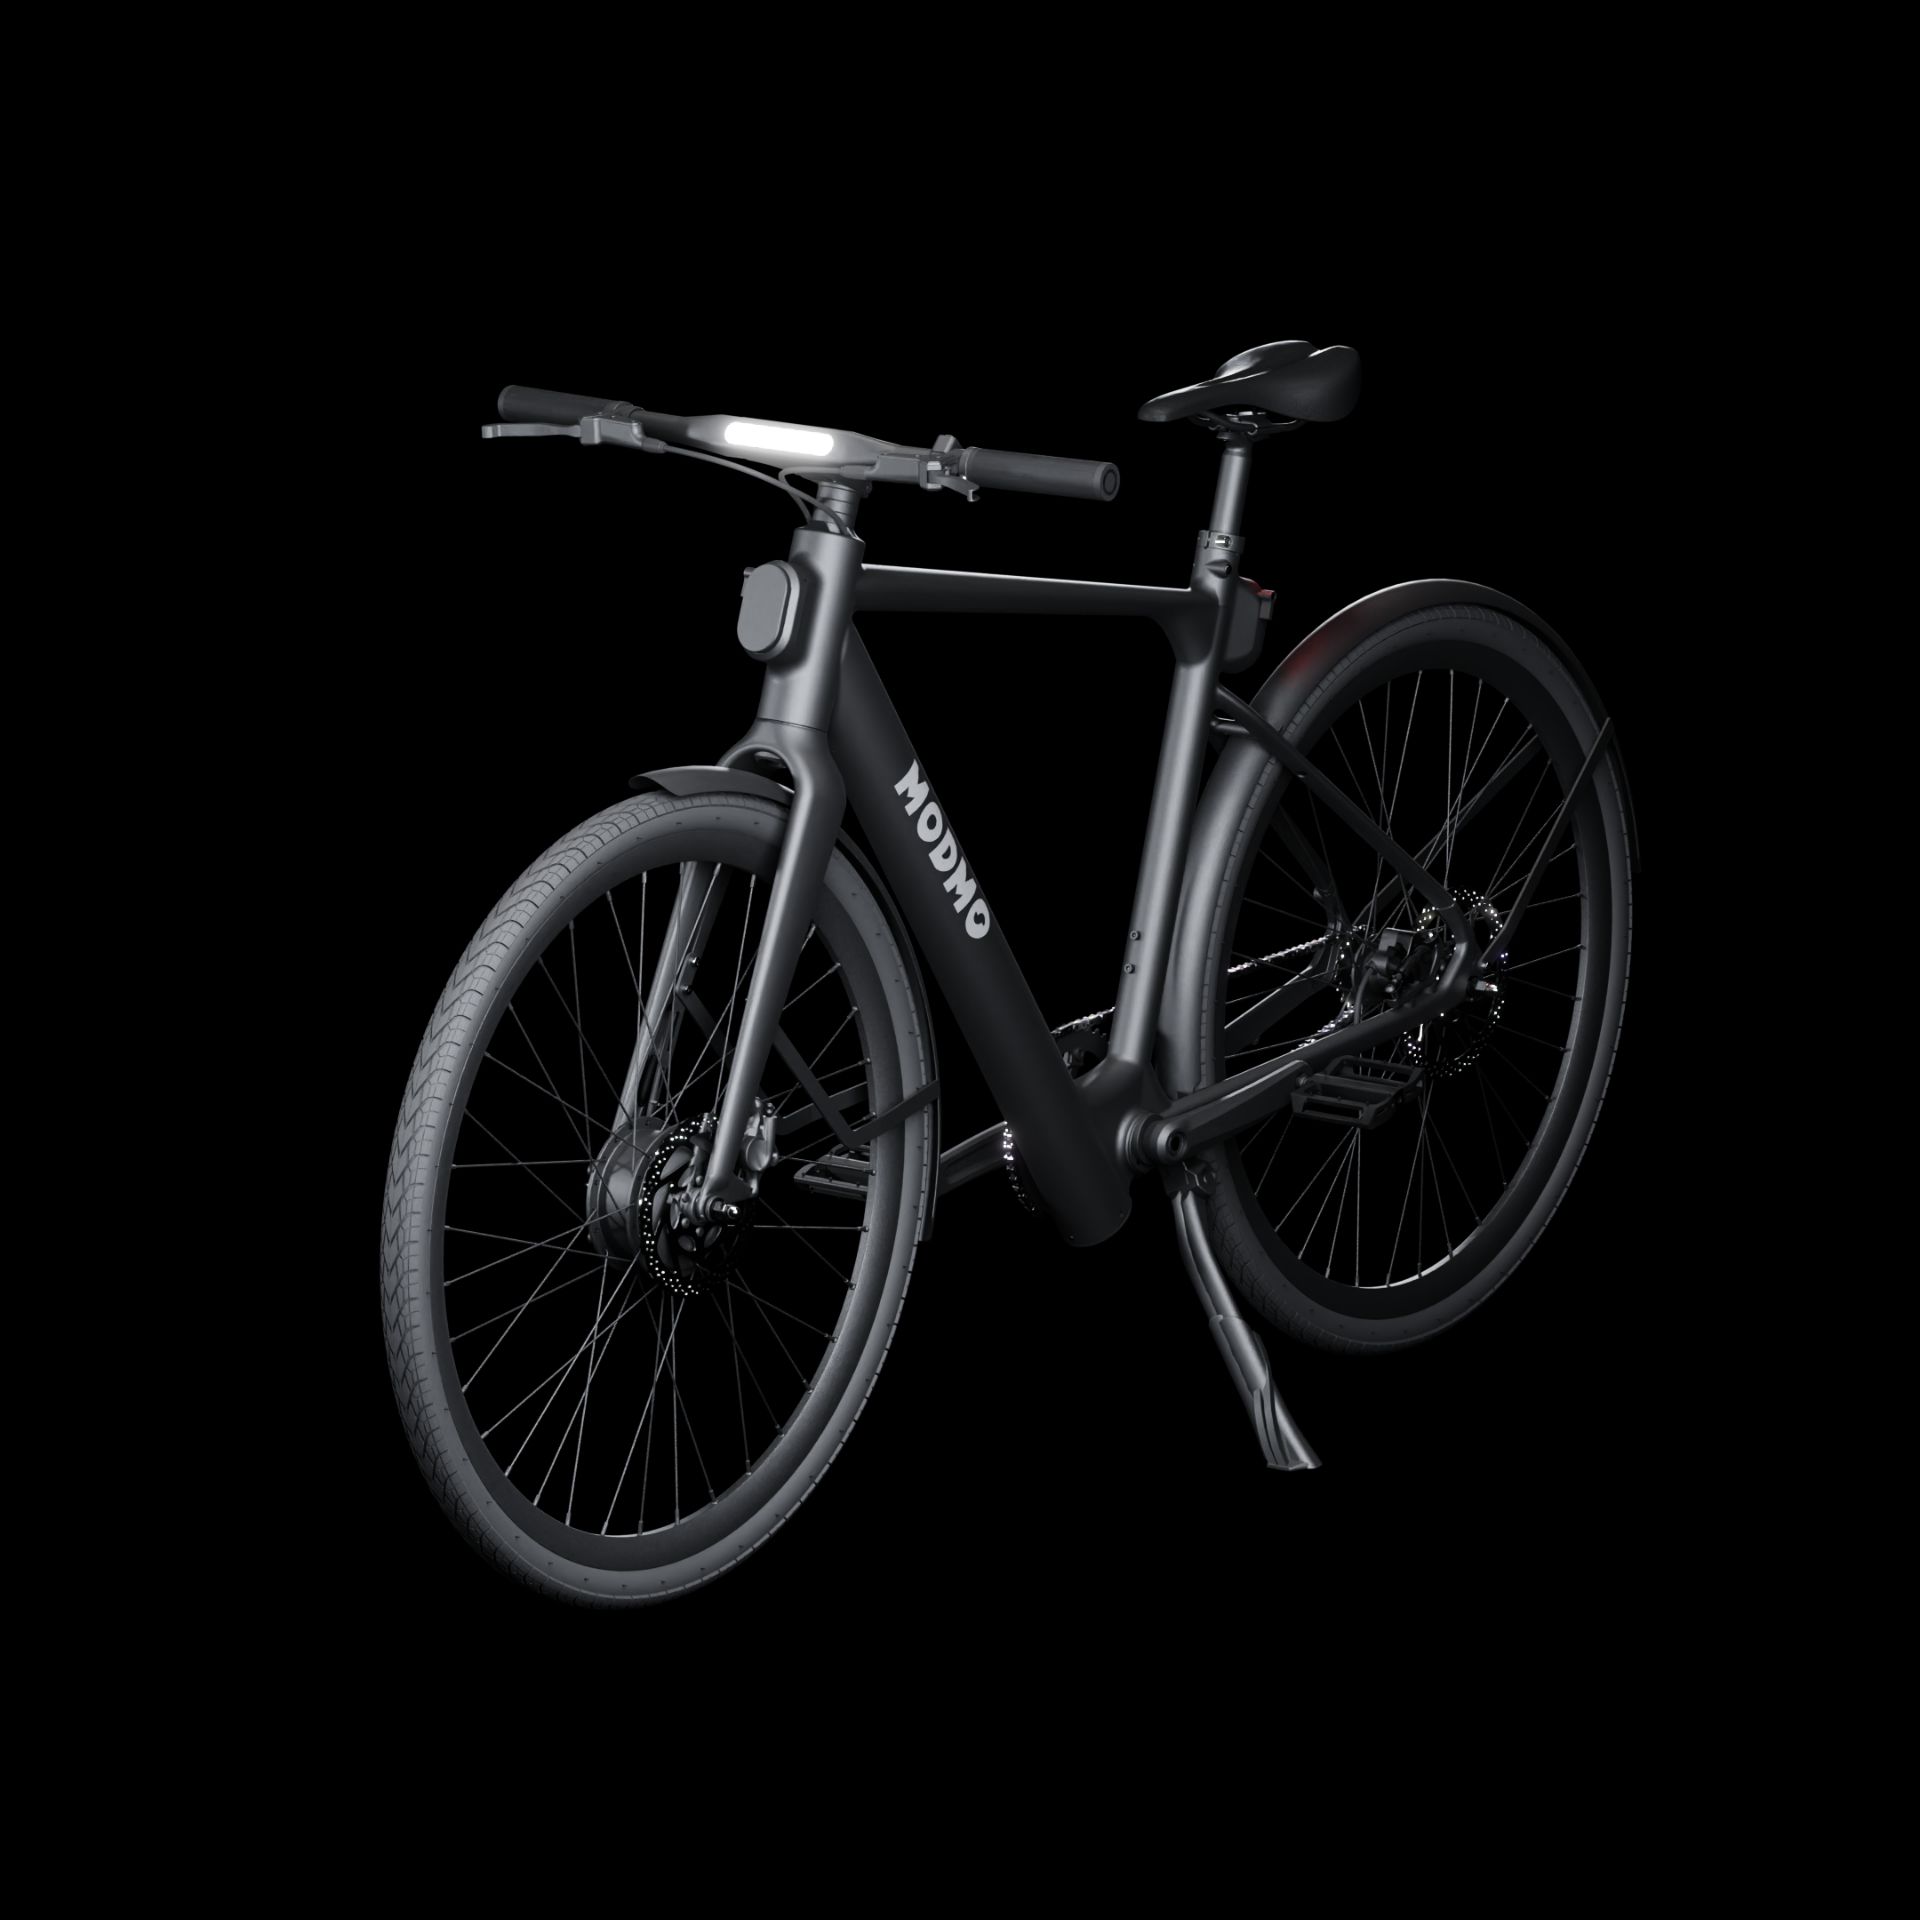 Modmo Saigon+ Electric Bicycle - RRP £2800 - Size S (Rider: 140-155cm) - Image 2 of 20